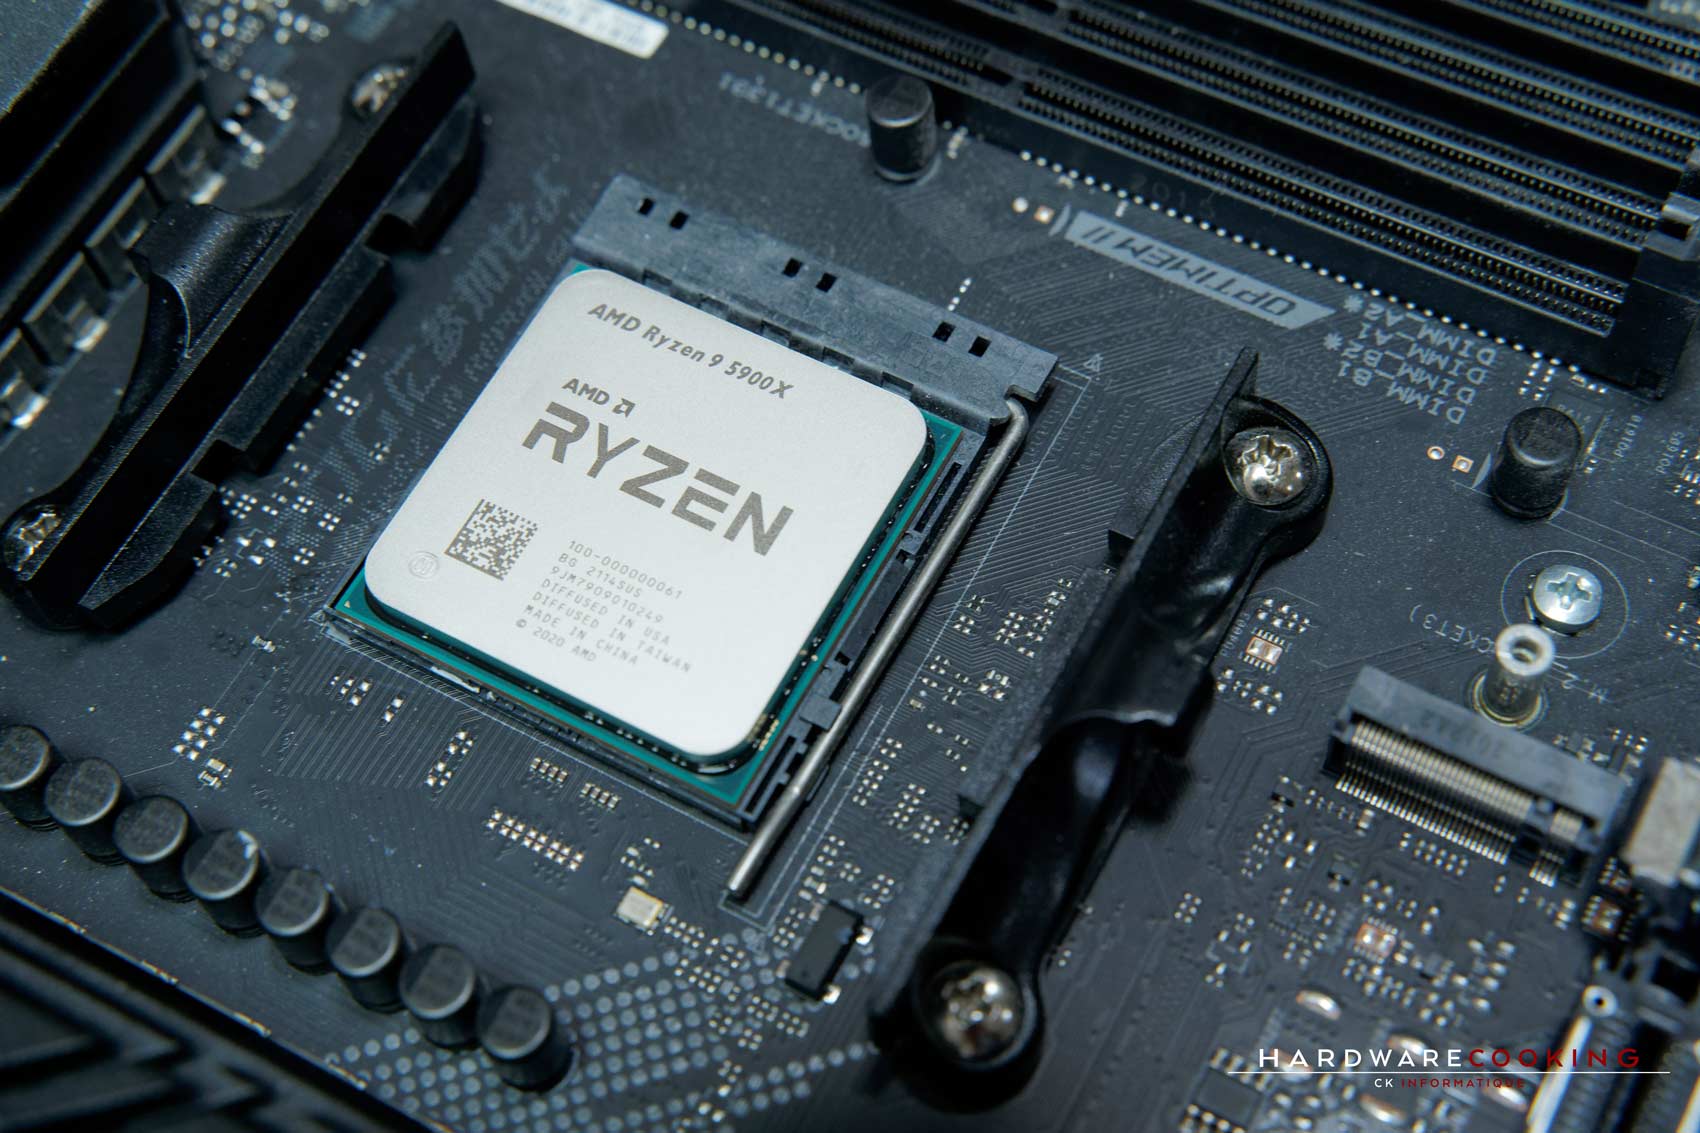 AMD Ryzen 9 5900X Test